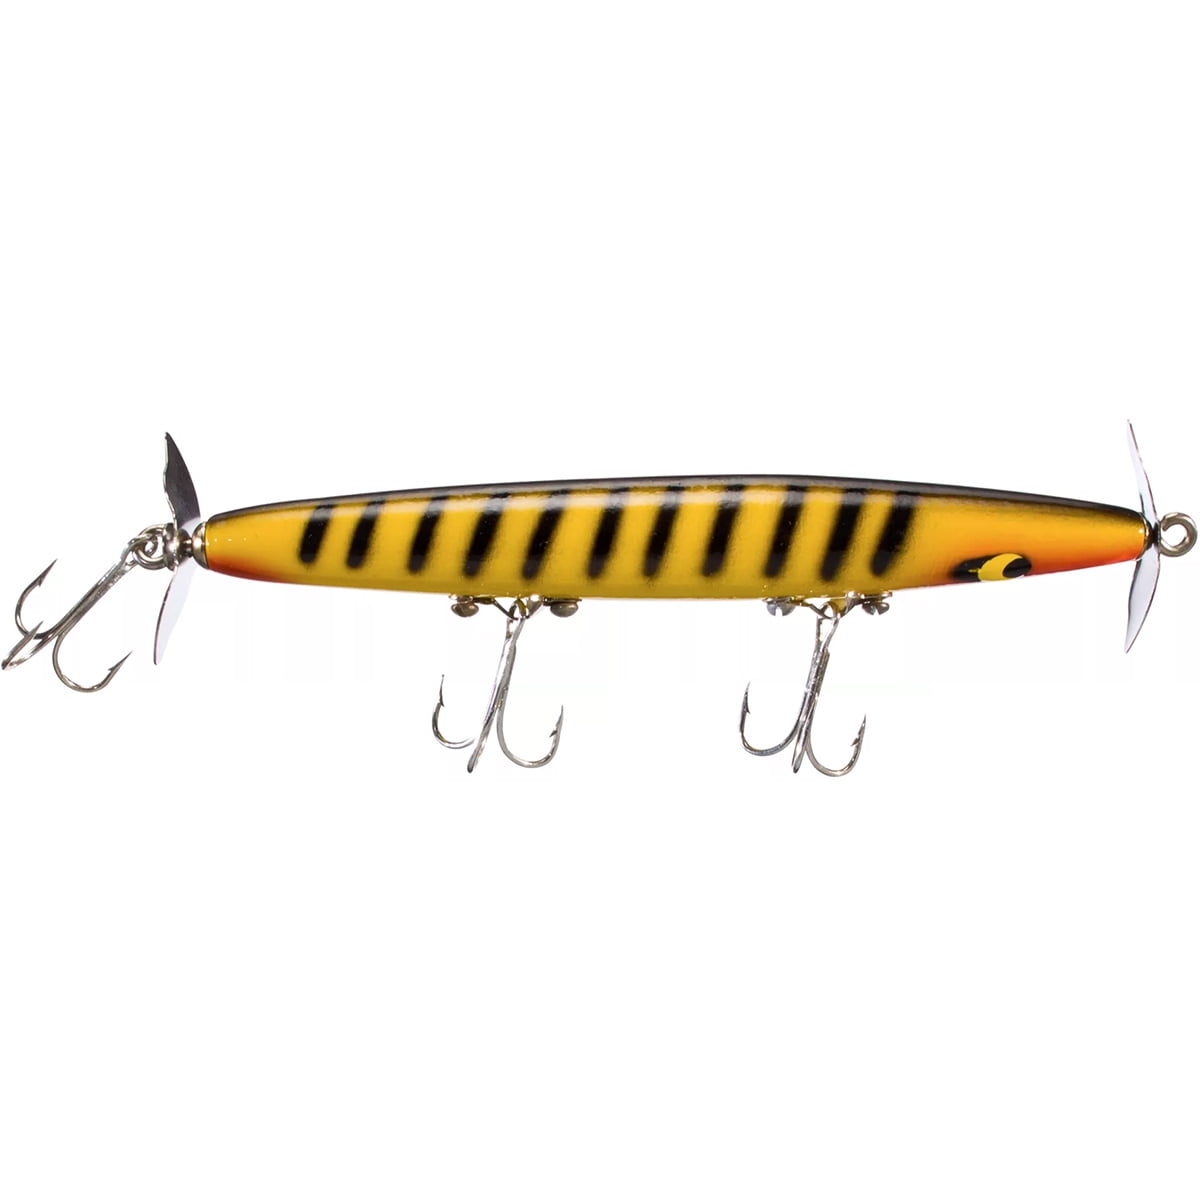 Smithwick Devils Horse 3/8 oz Surface Fishing Lure - Yellow/Black